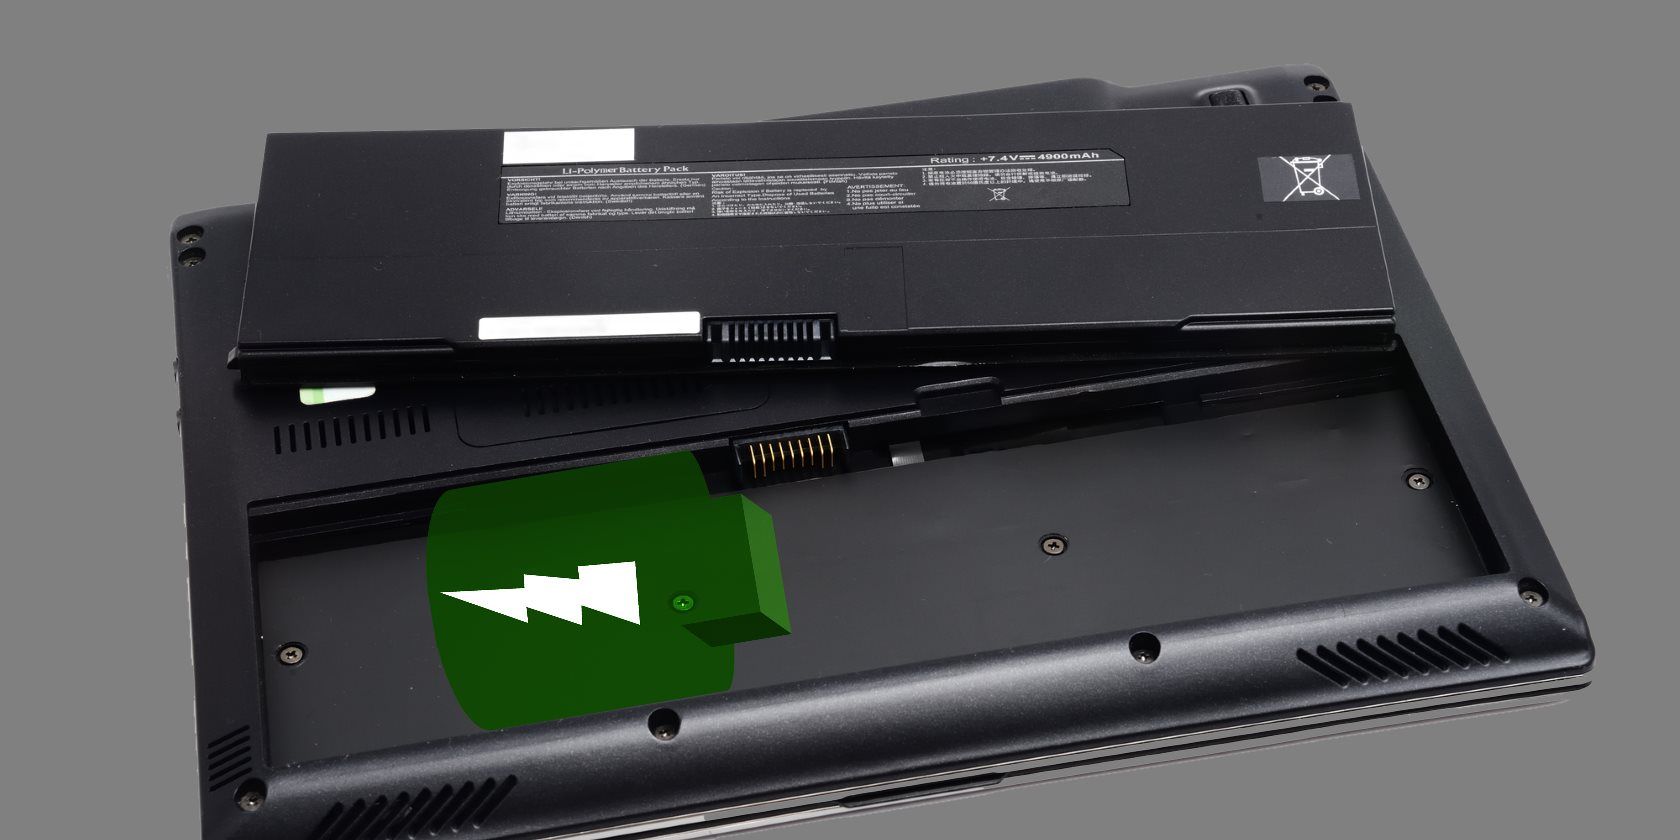 A removable laptop battery